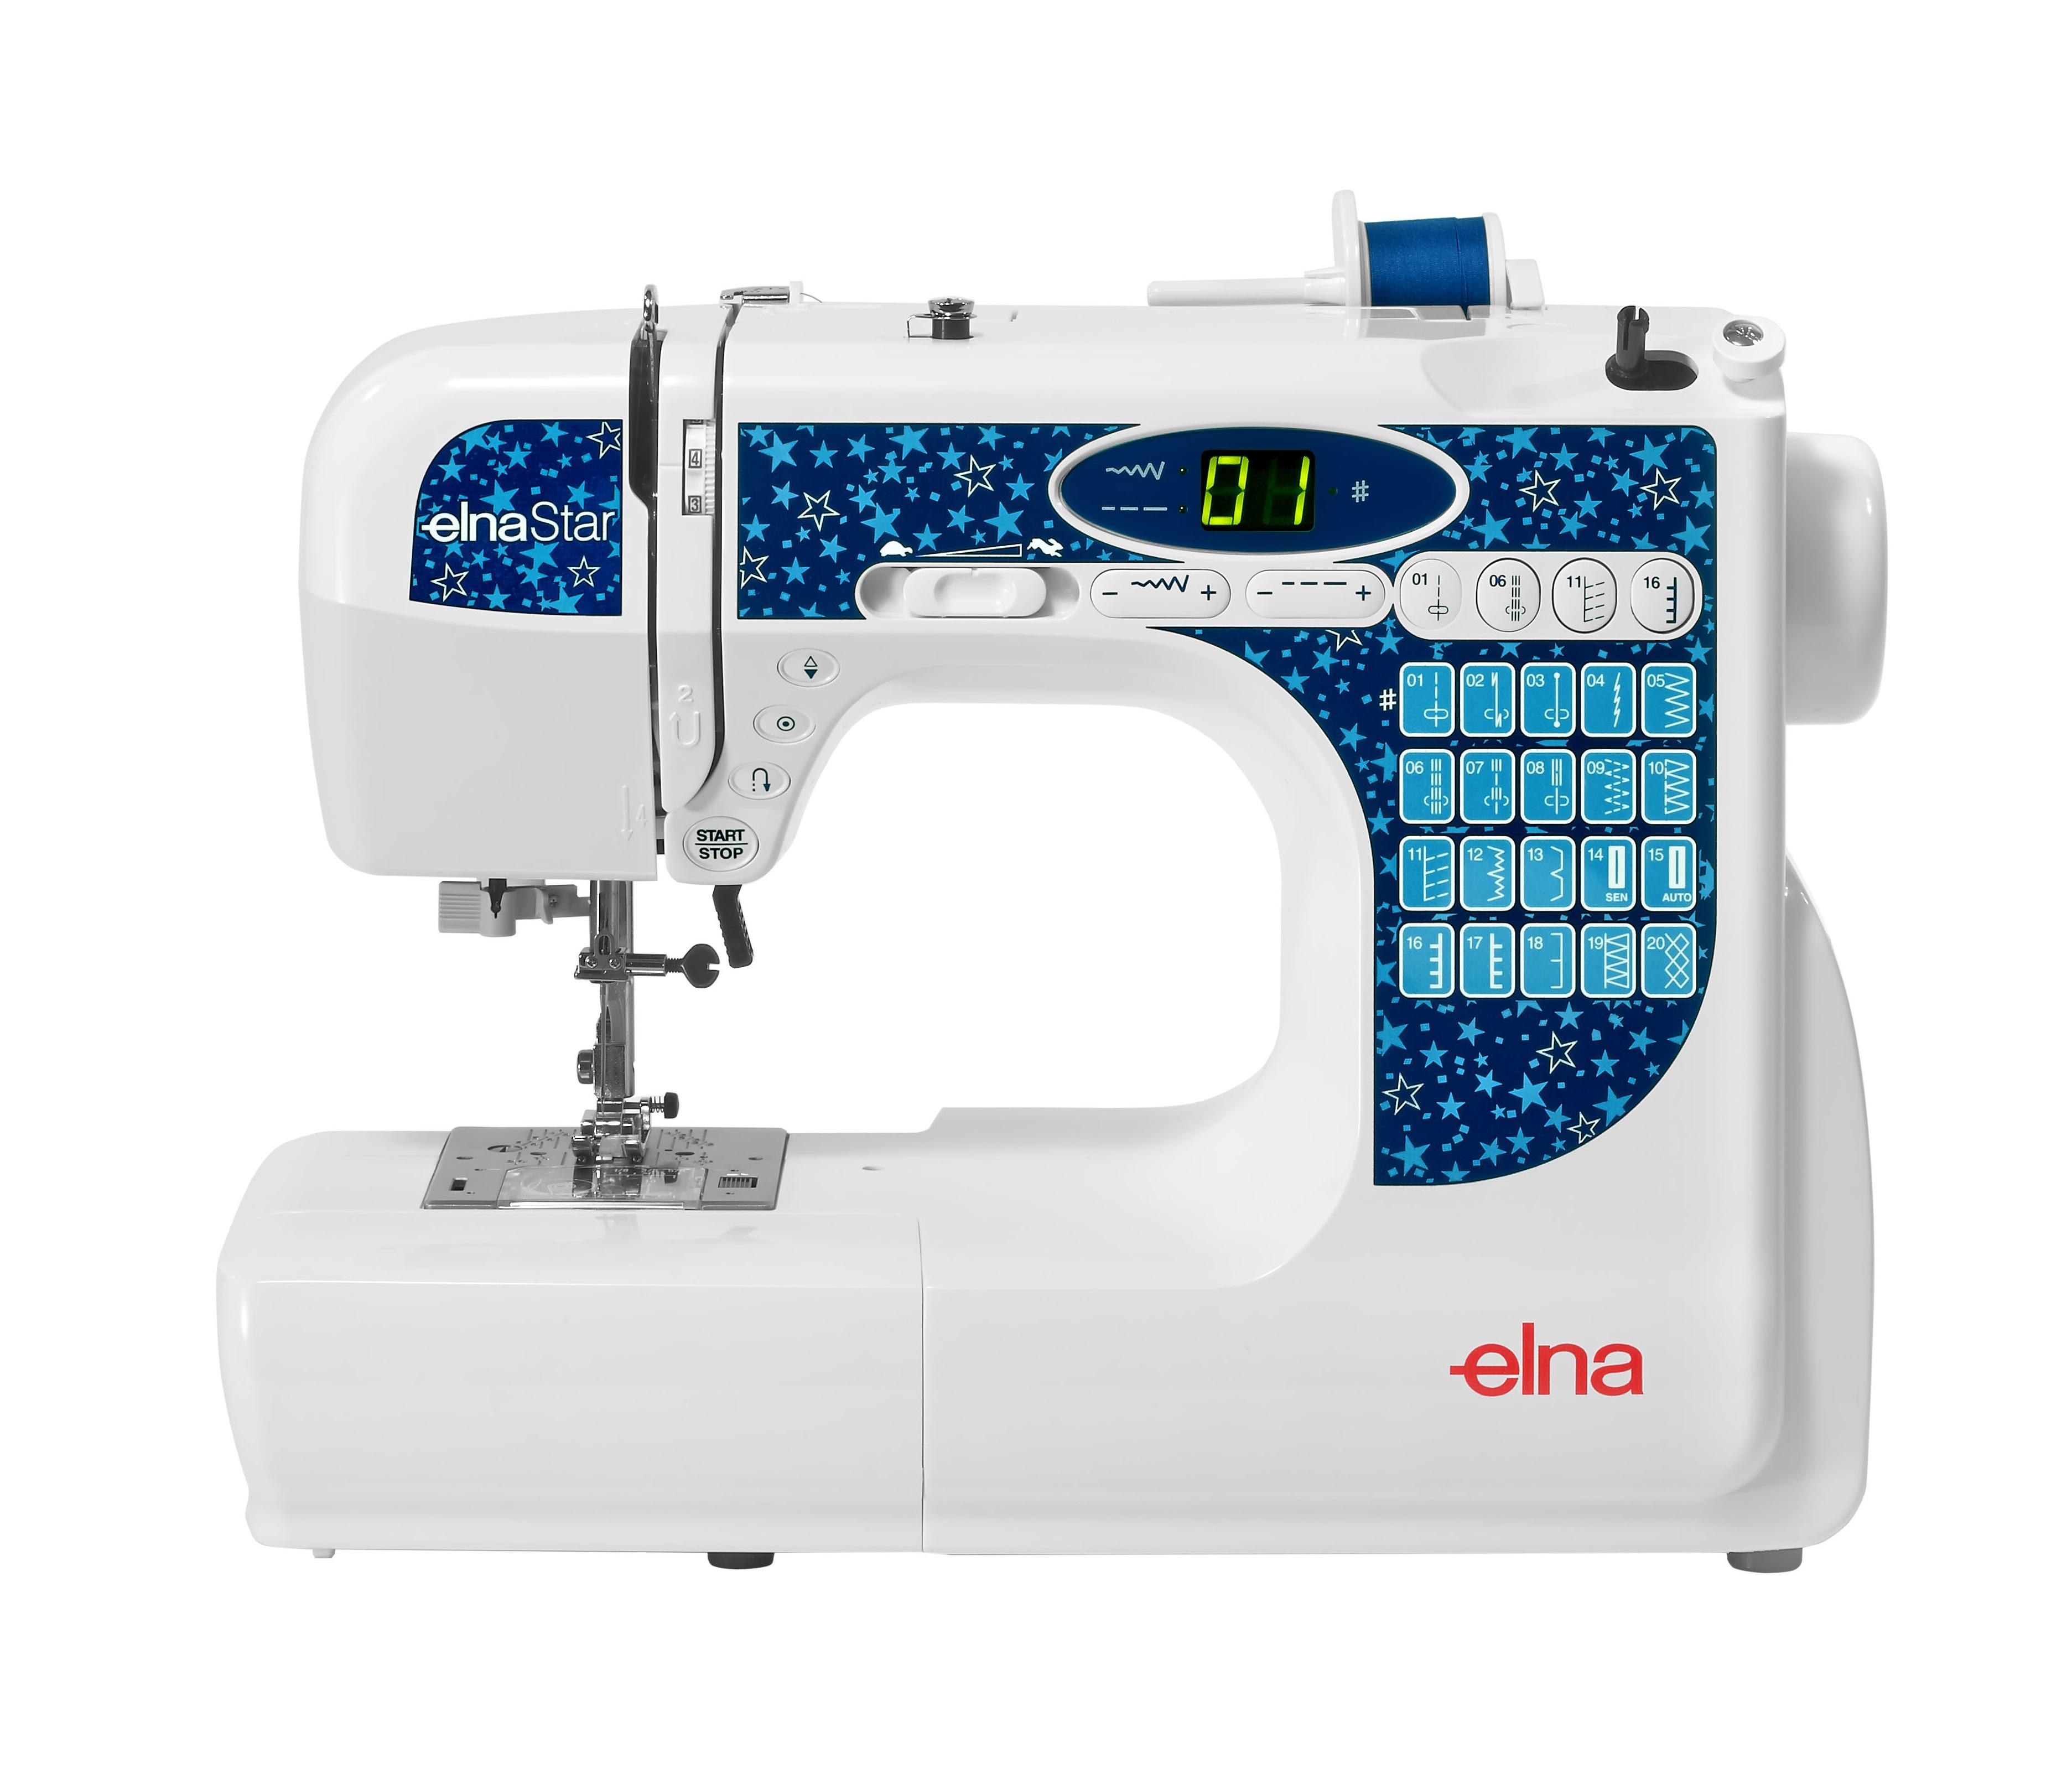 Elna - Global website - Sewing - elnaStar